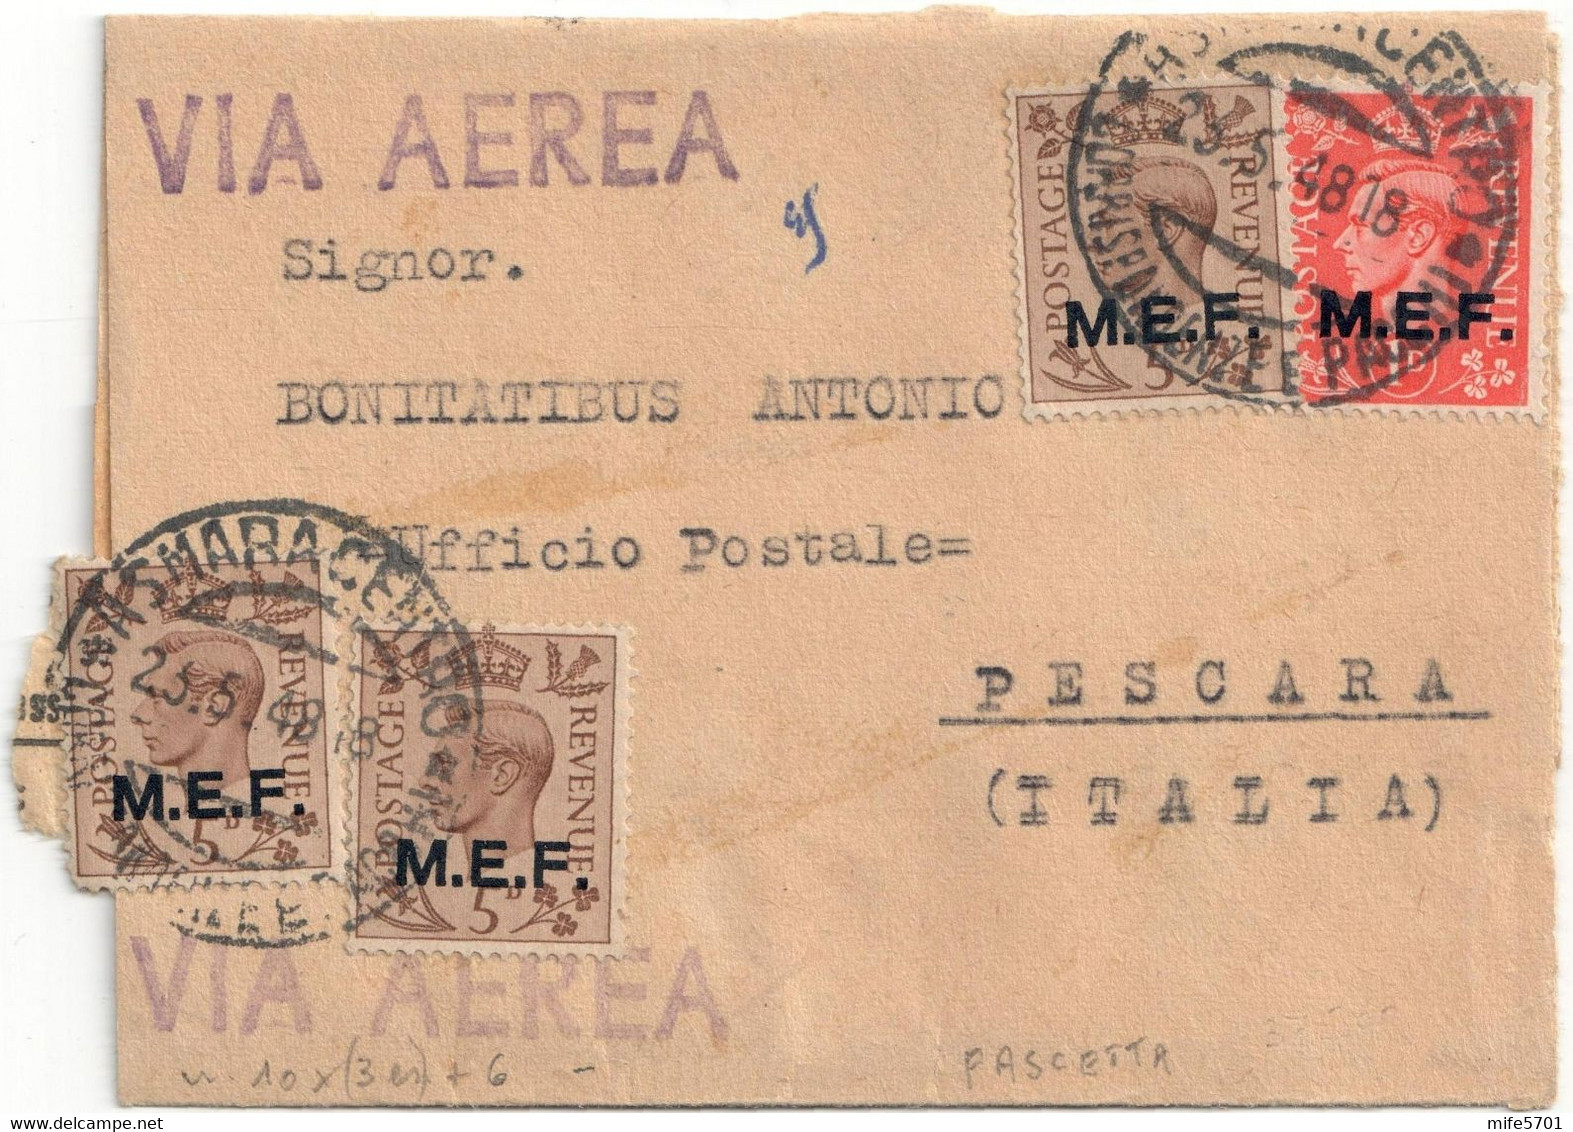 REGNO D'ITALIA OCCUPAZIONI M.E.F. FASCETTA DA ASMARA A PESCARA 23.5.1948 4 FRANCOBOLLI DA P. 1 + 3 ES. P. 5 SASSONE 6/10 - Occ. Britanique MEF